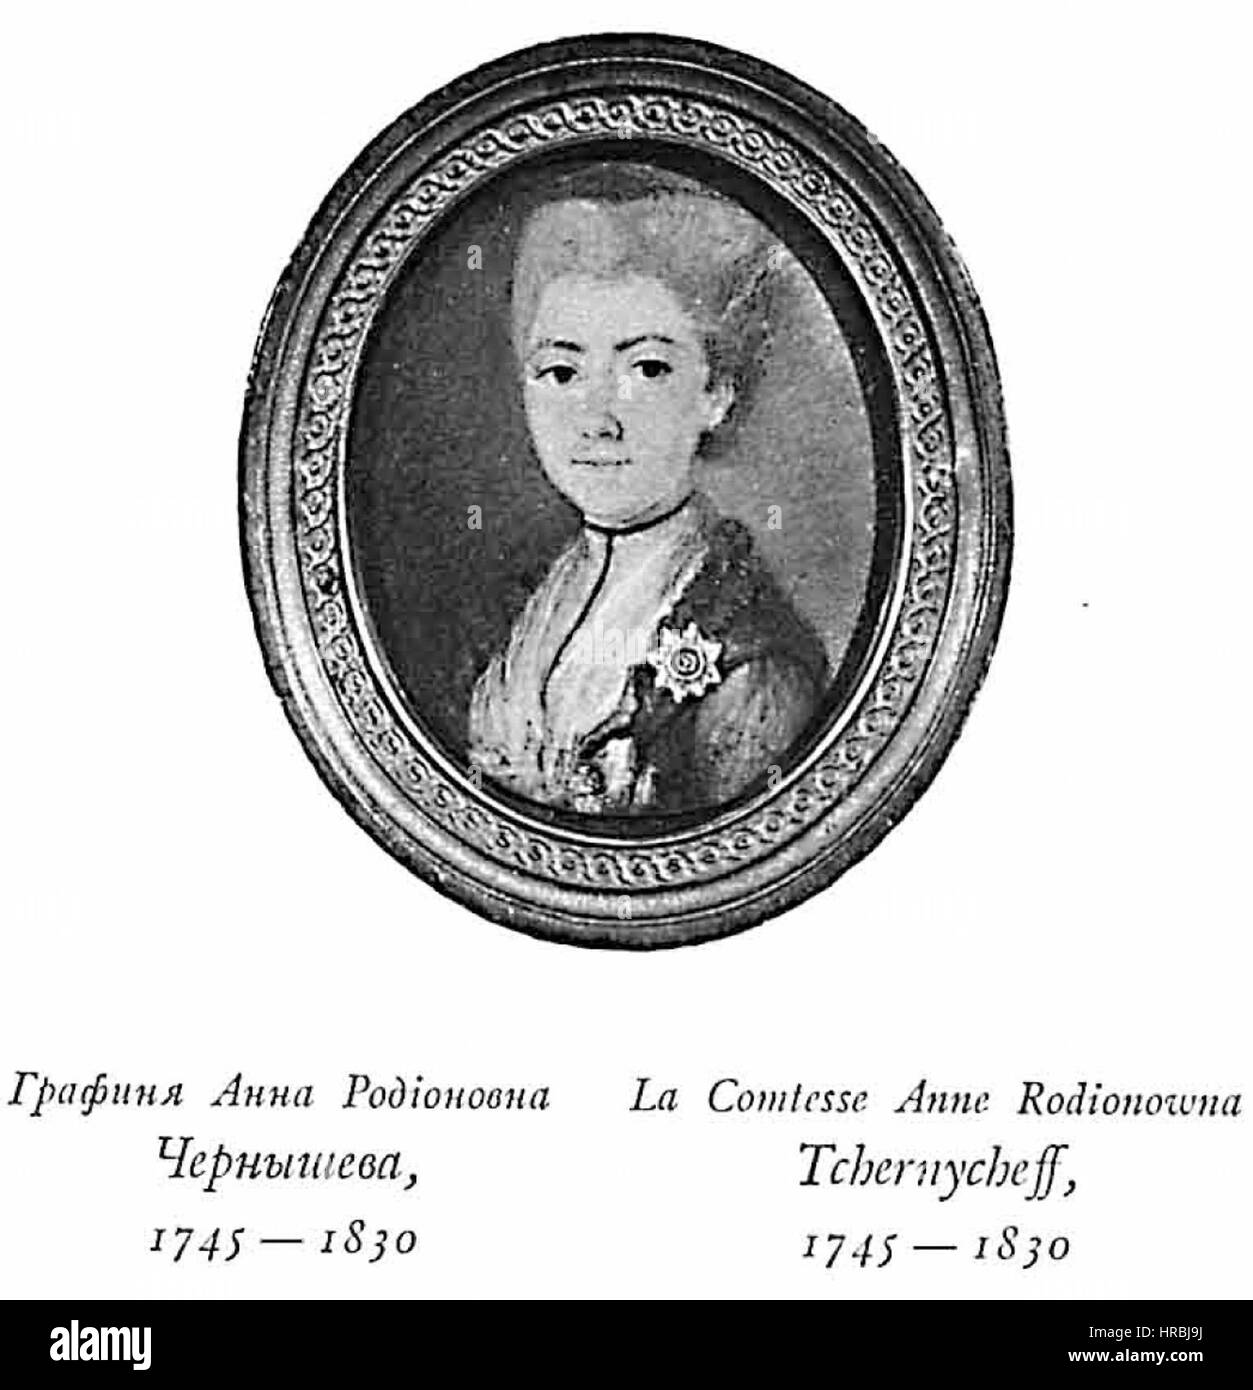 RusPortraits v5-052 La Comtesse Anne Rodionowna Tchernycheff, 1745-1830 Banque D'Images